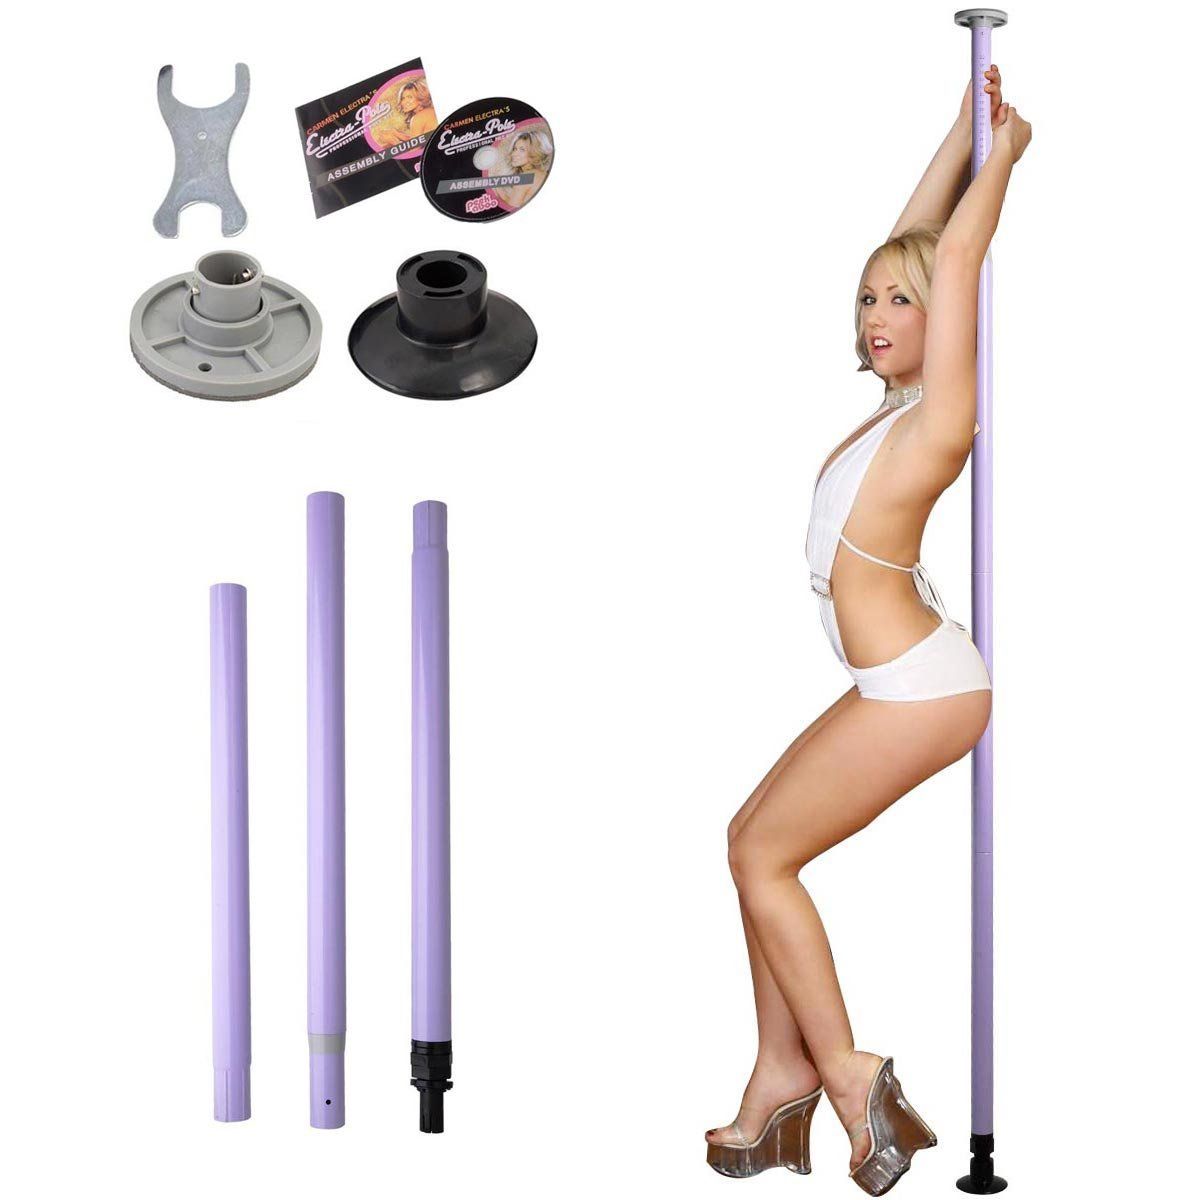 Peek-a-boo stripper pole dancing set